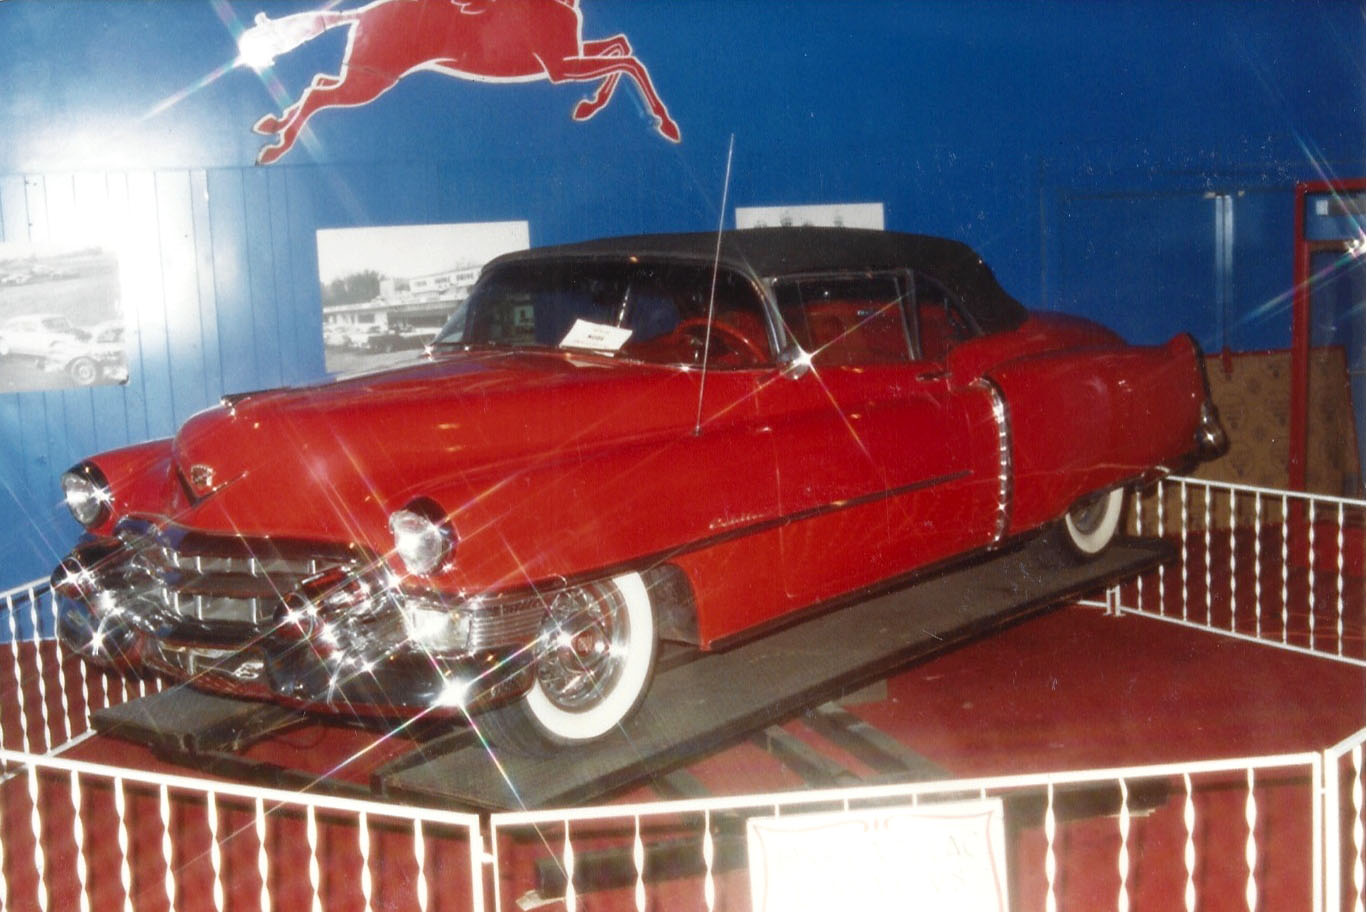 1953 Cadillac Eldorado convertible with continental kit.